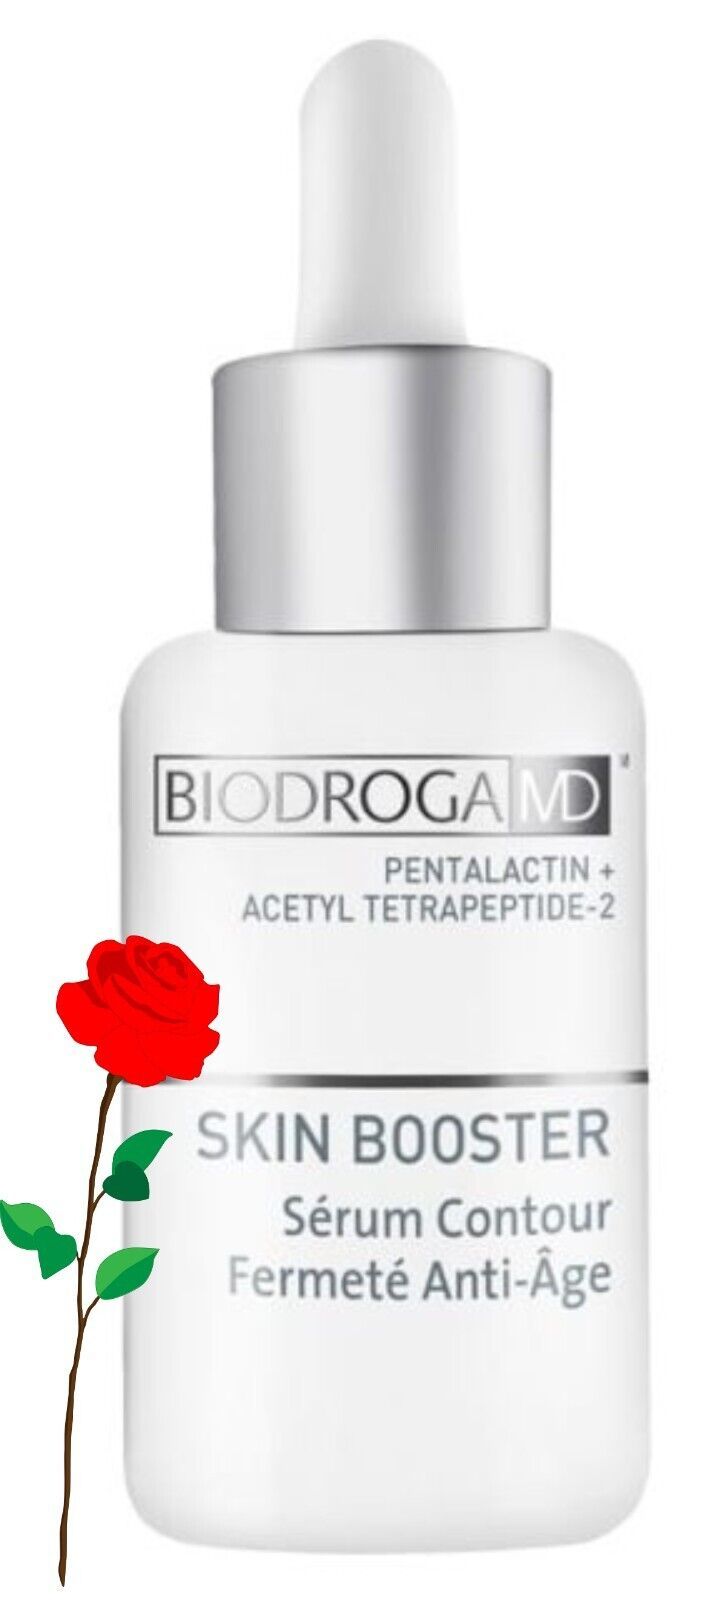 Biodroga MD Contouring Anti-Age Serum 30ml. Maintain elasticity and tone. - $128.25